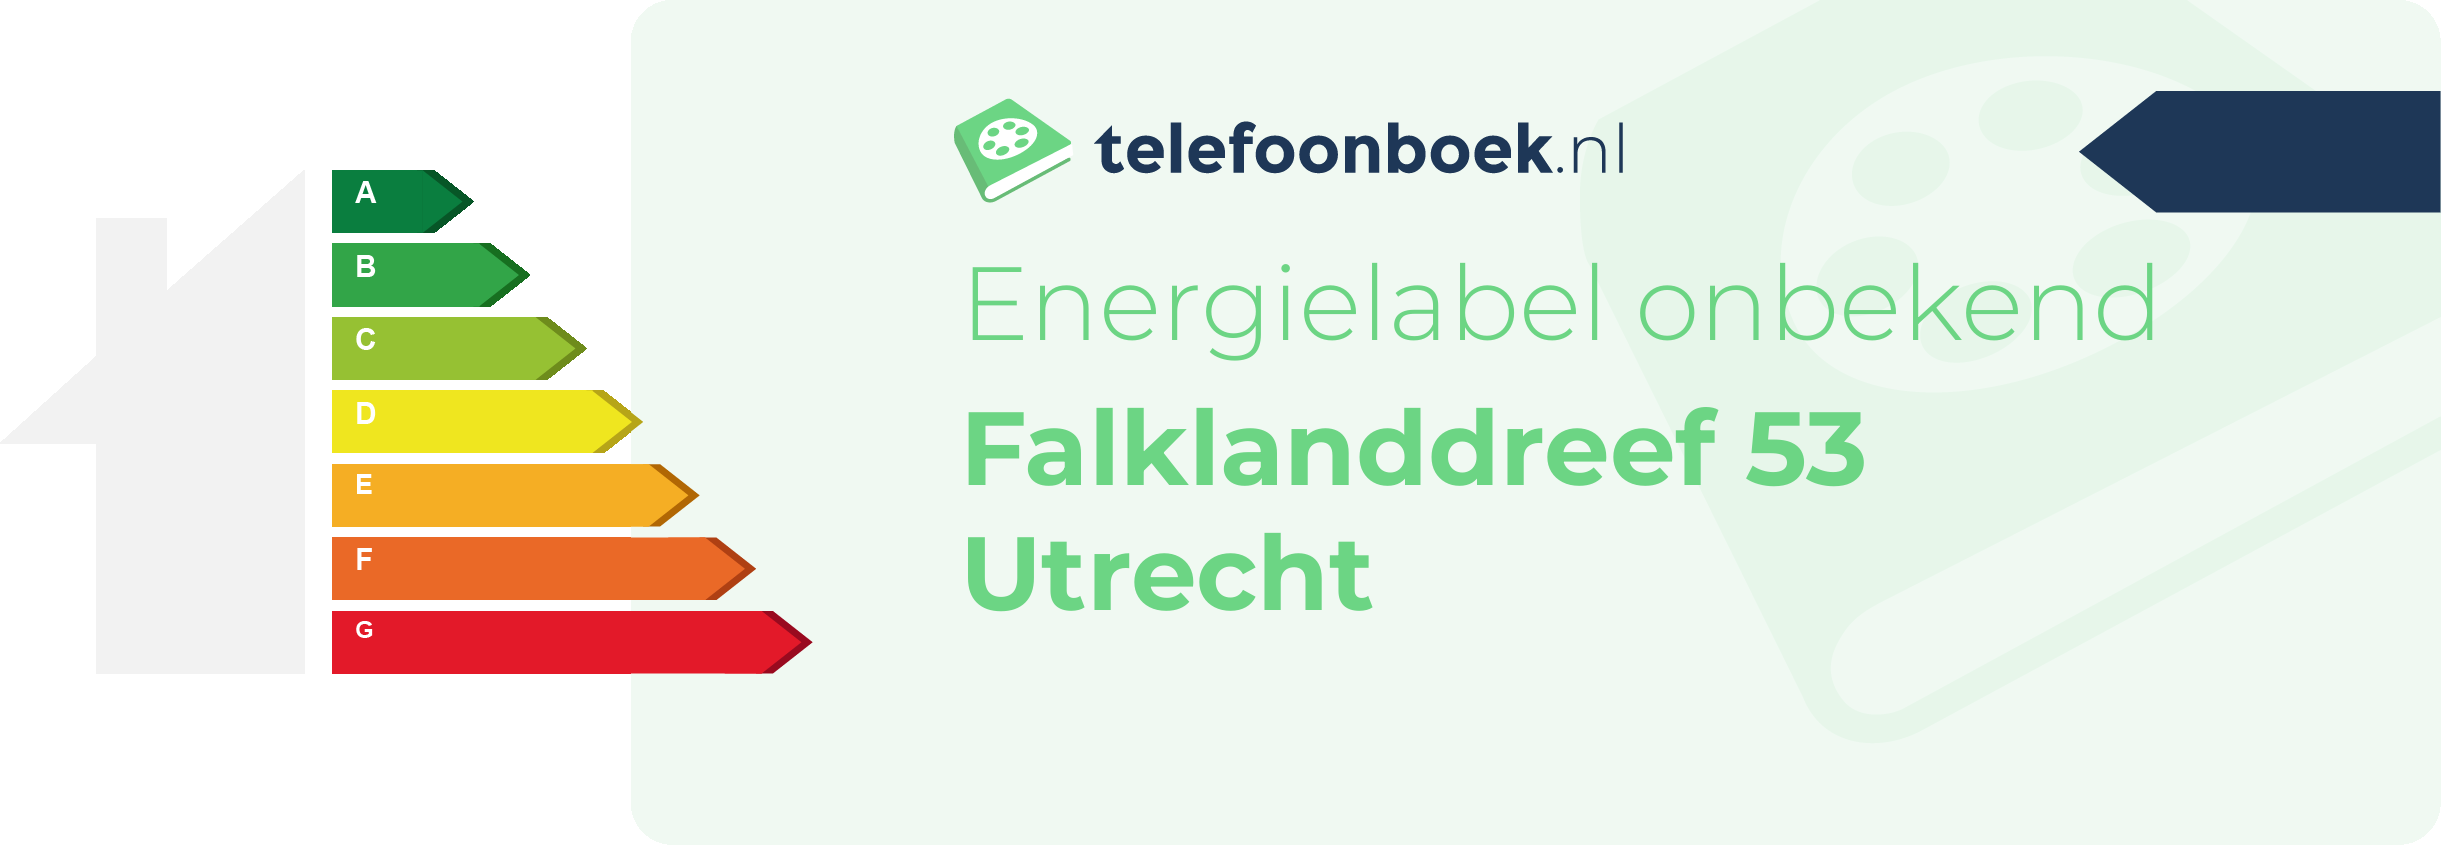 Energielabel Falklanddreef 53 Utrecht